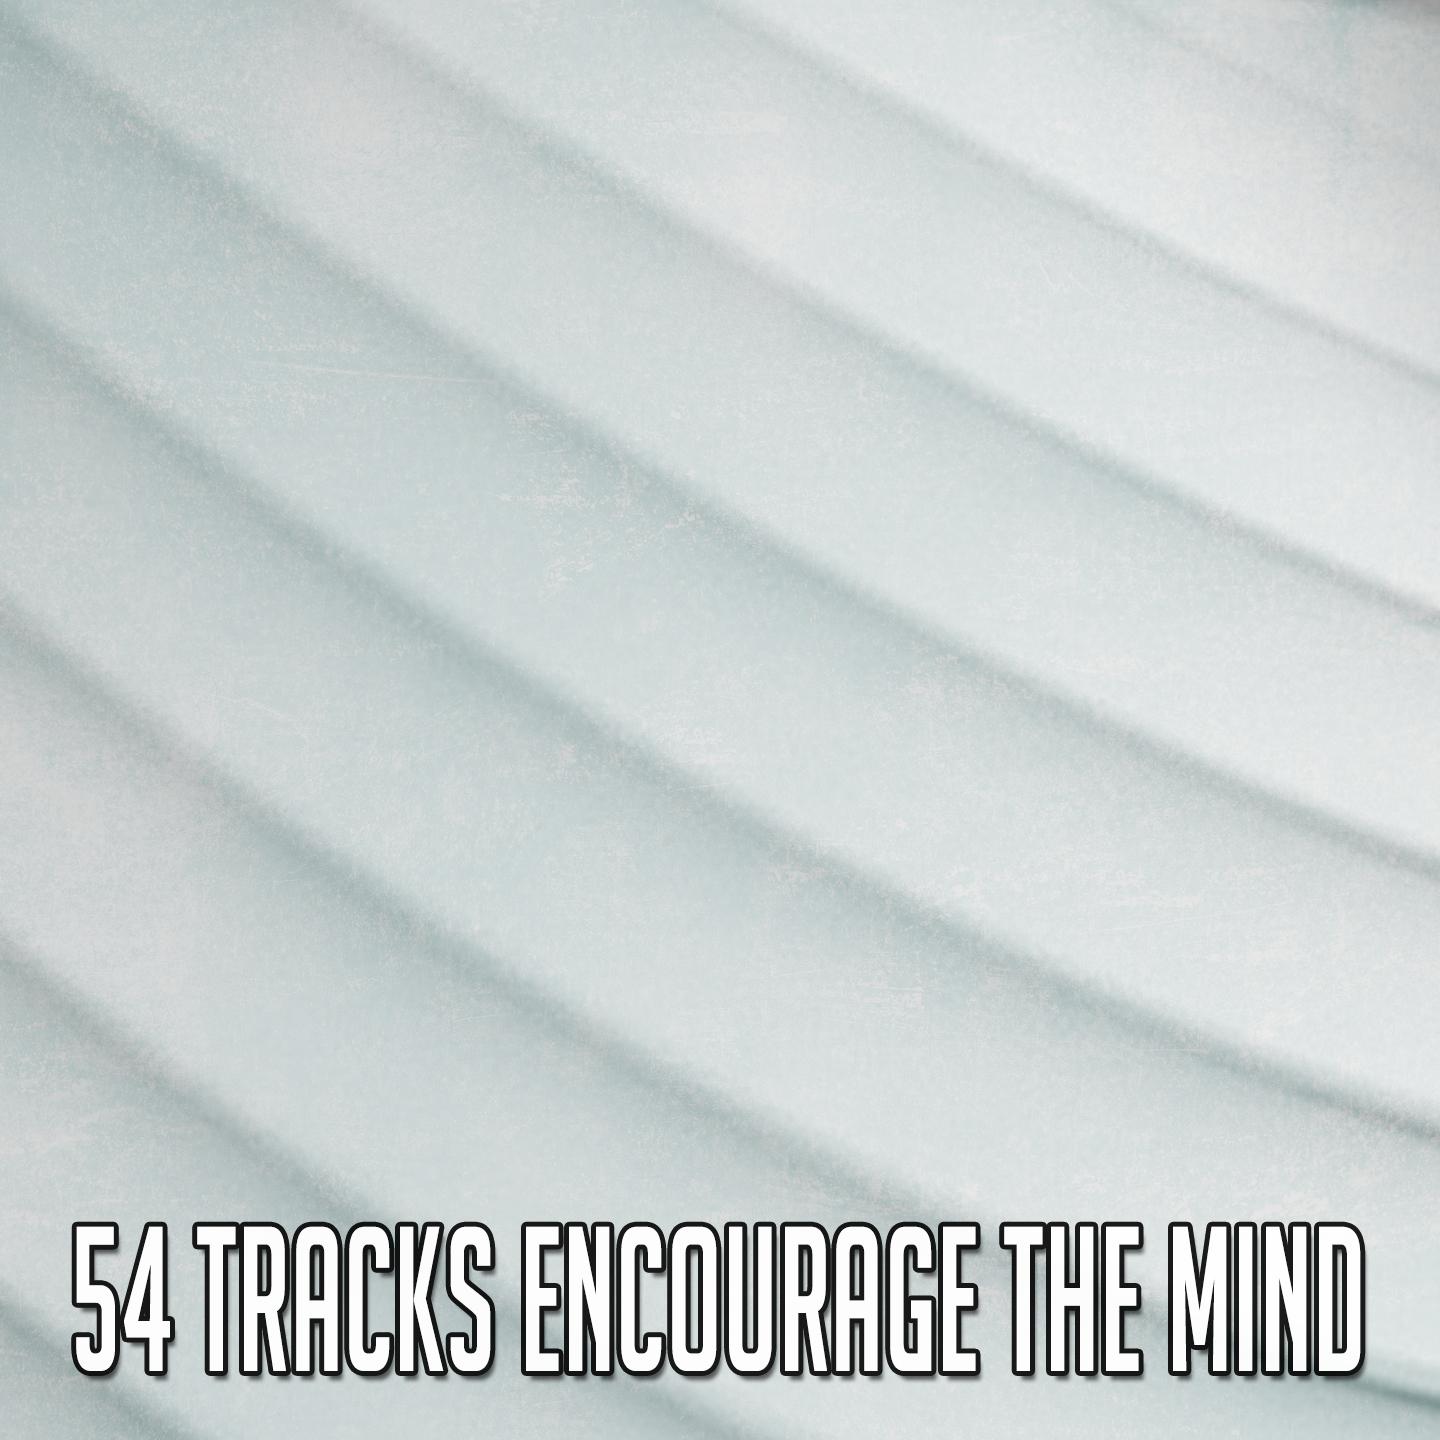 54 Tracks Encourage the Mind